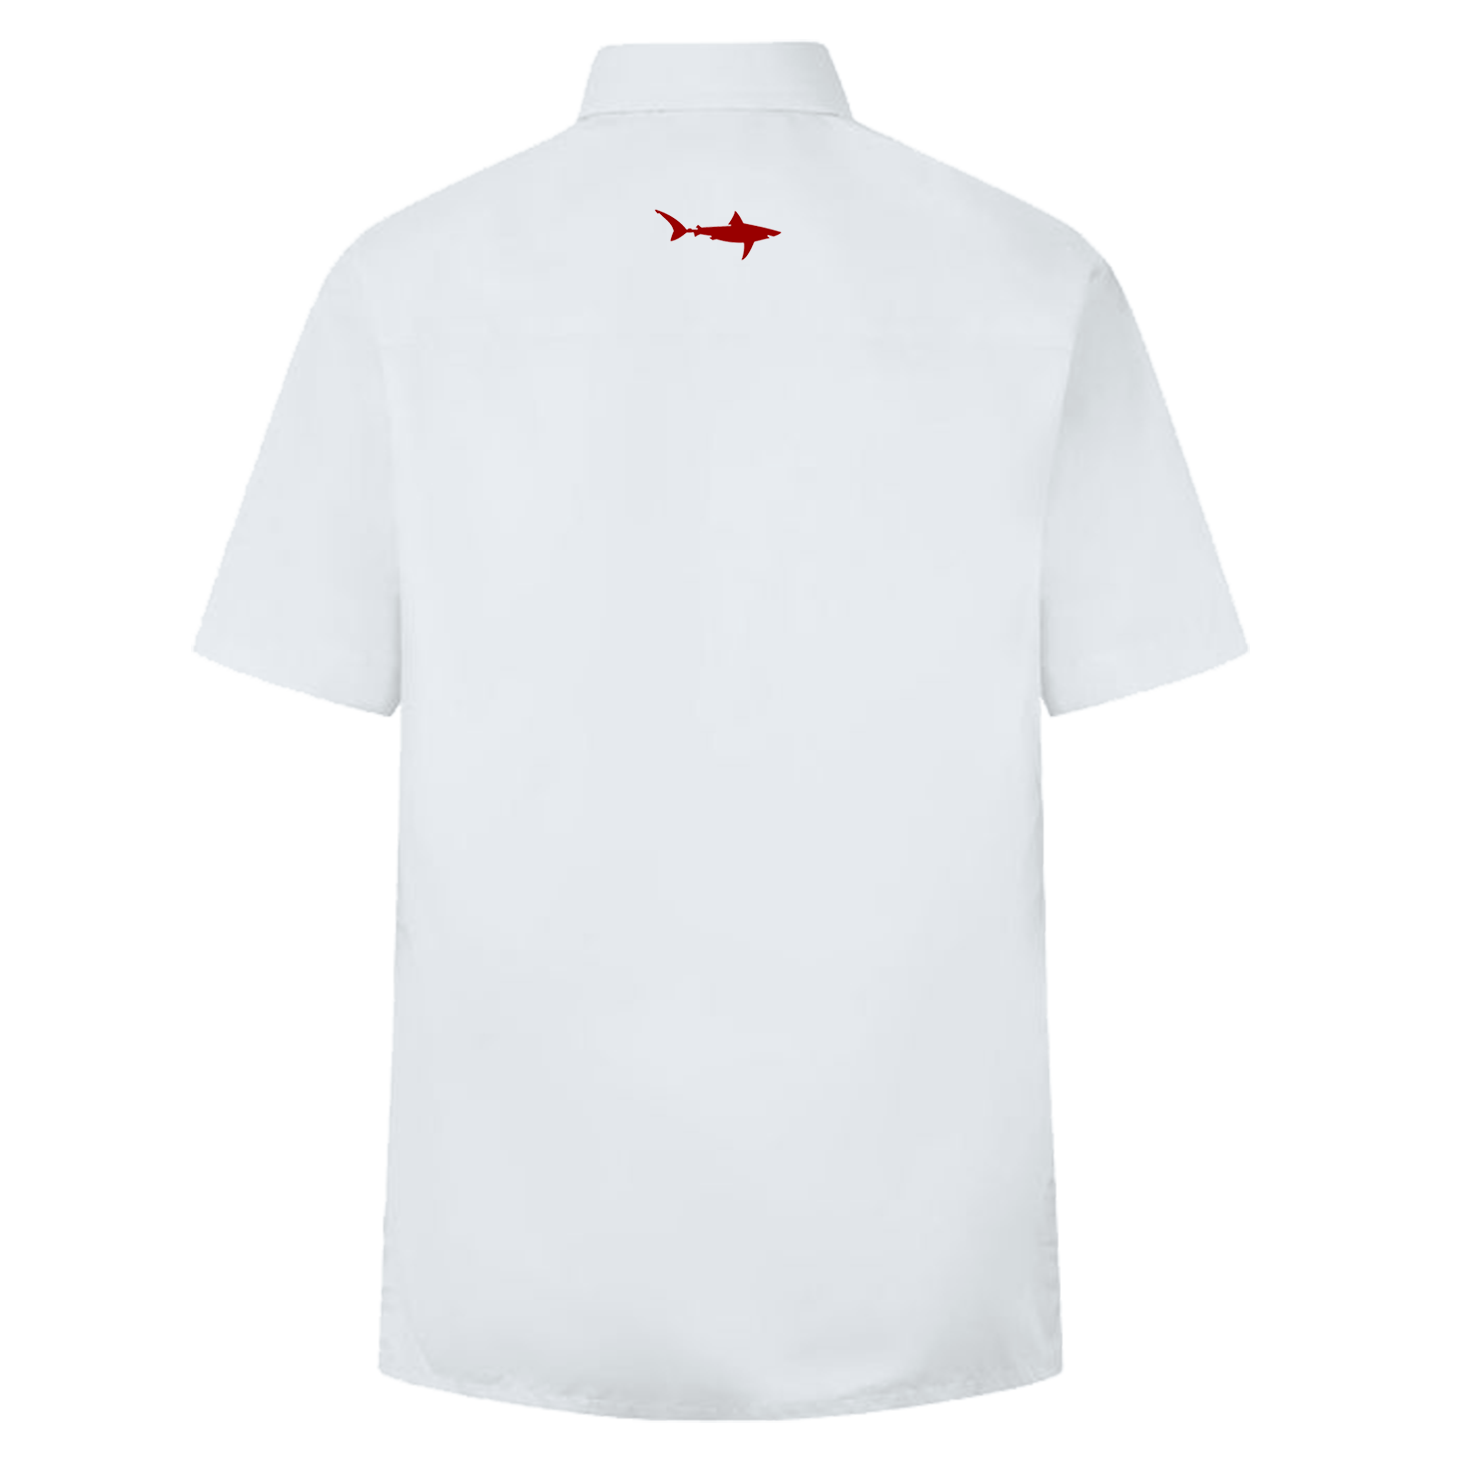 Nixor O Levels H/S Shirt - Youniform